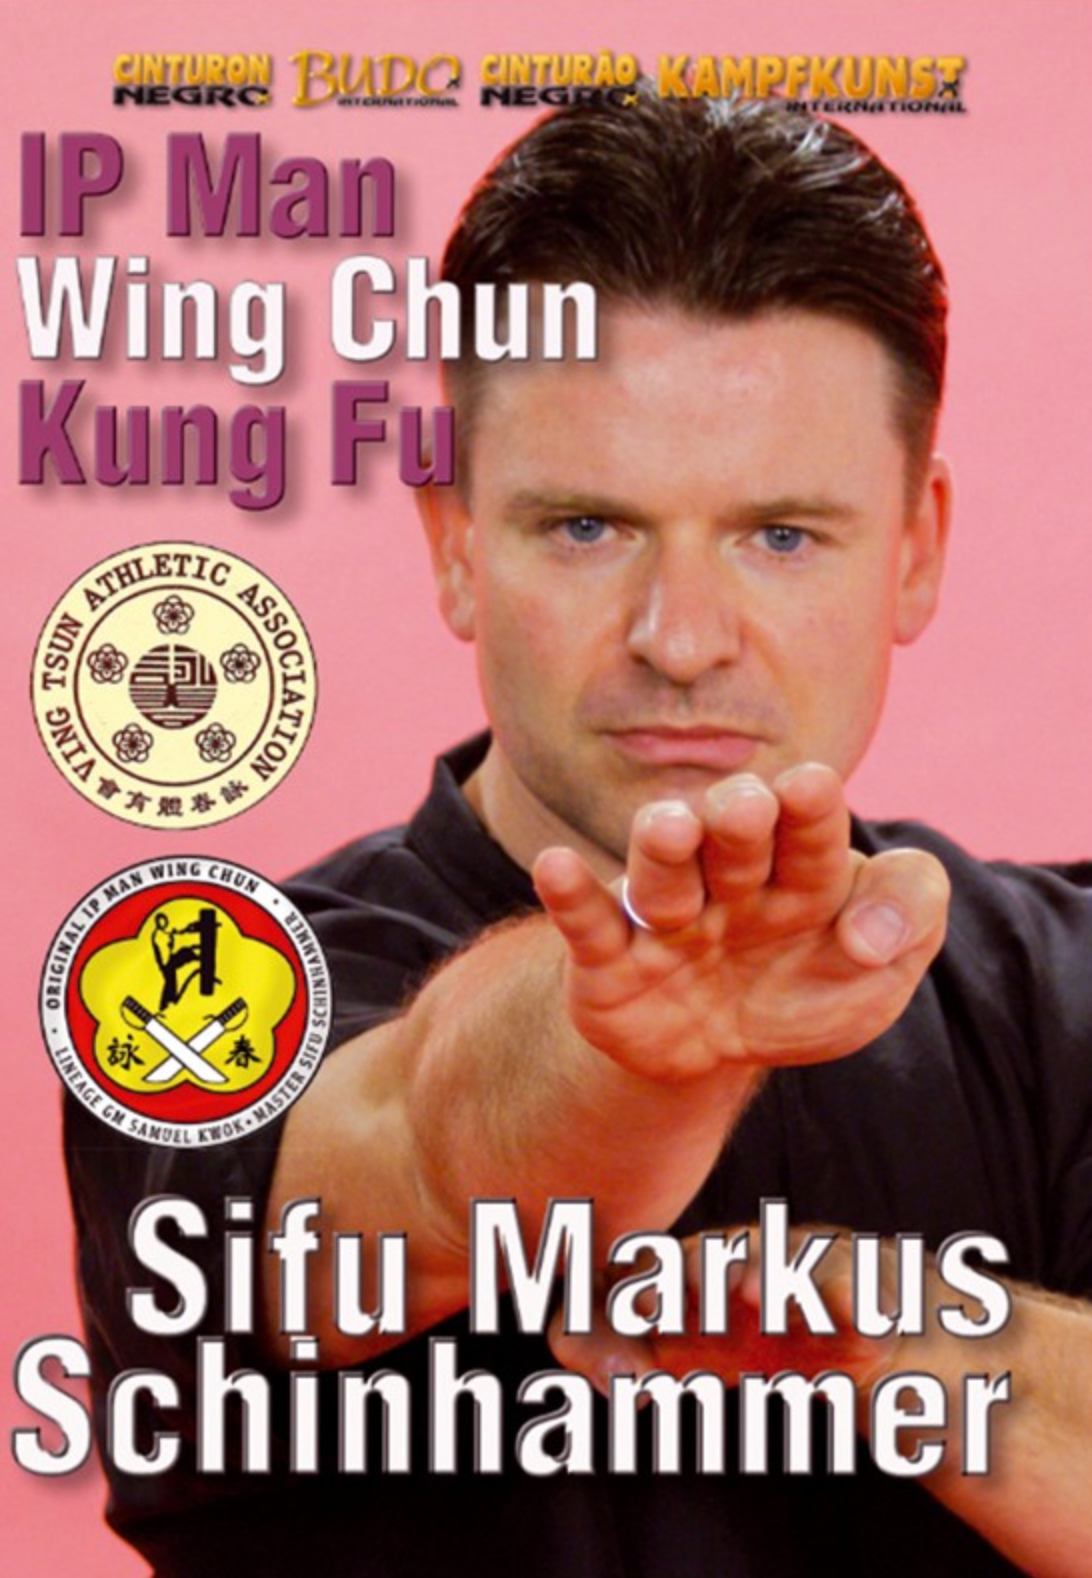 Ip Man Wing Chun Kung Fu DVD with Markus Schinhammer - Budovideos Inc